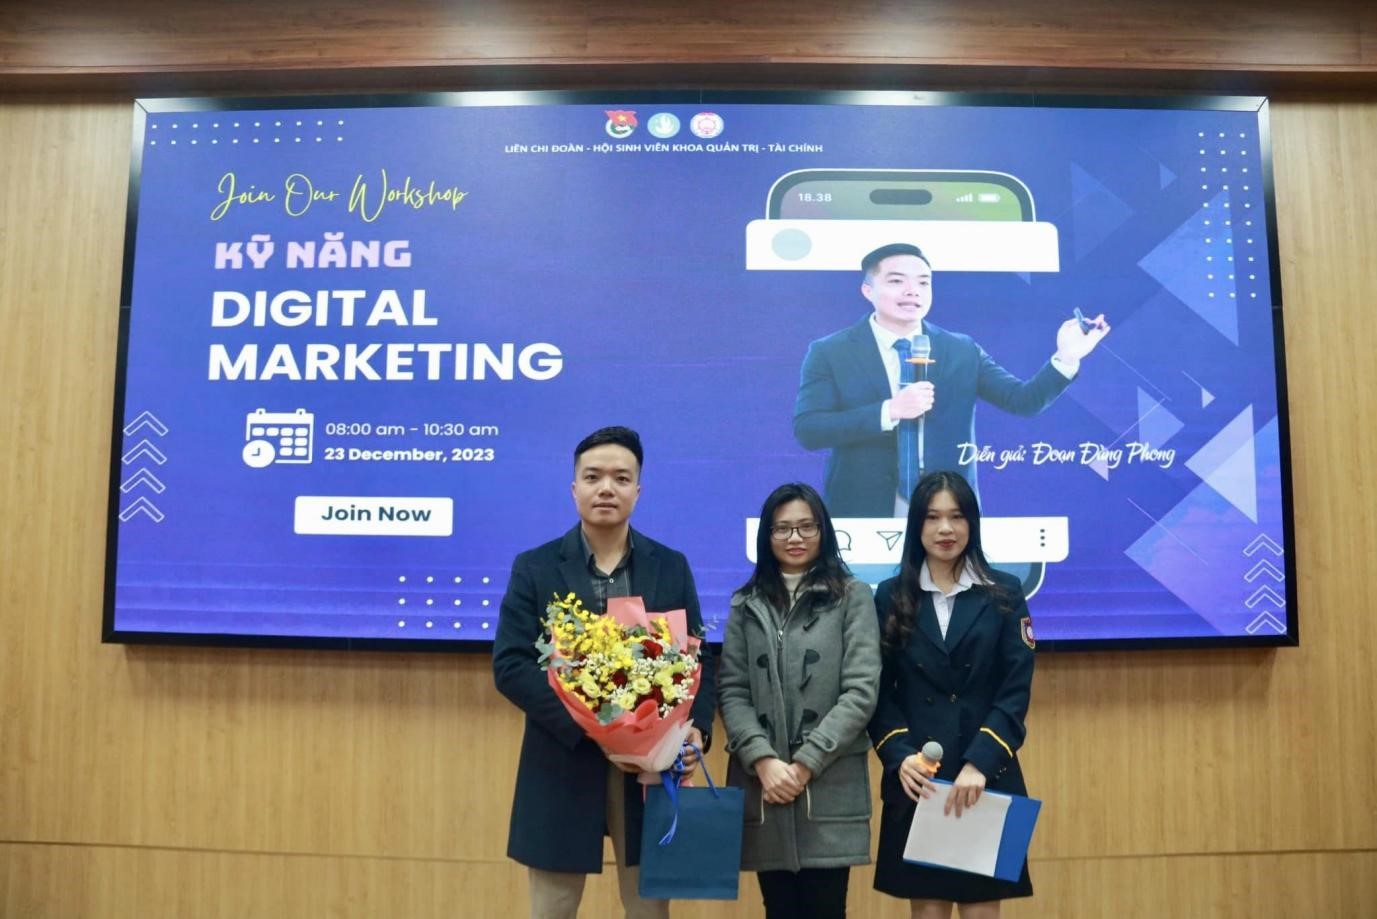 Workshop “ Kĩ năng Digital Marketing"